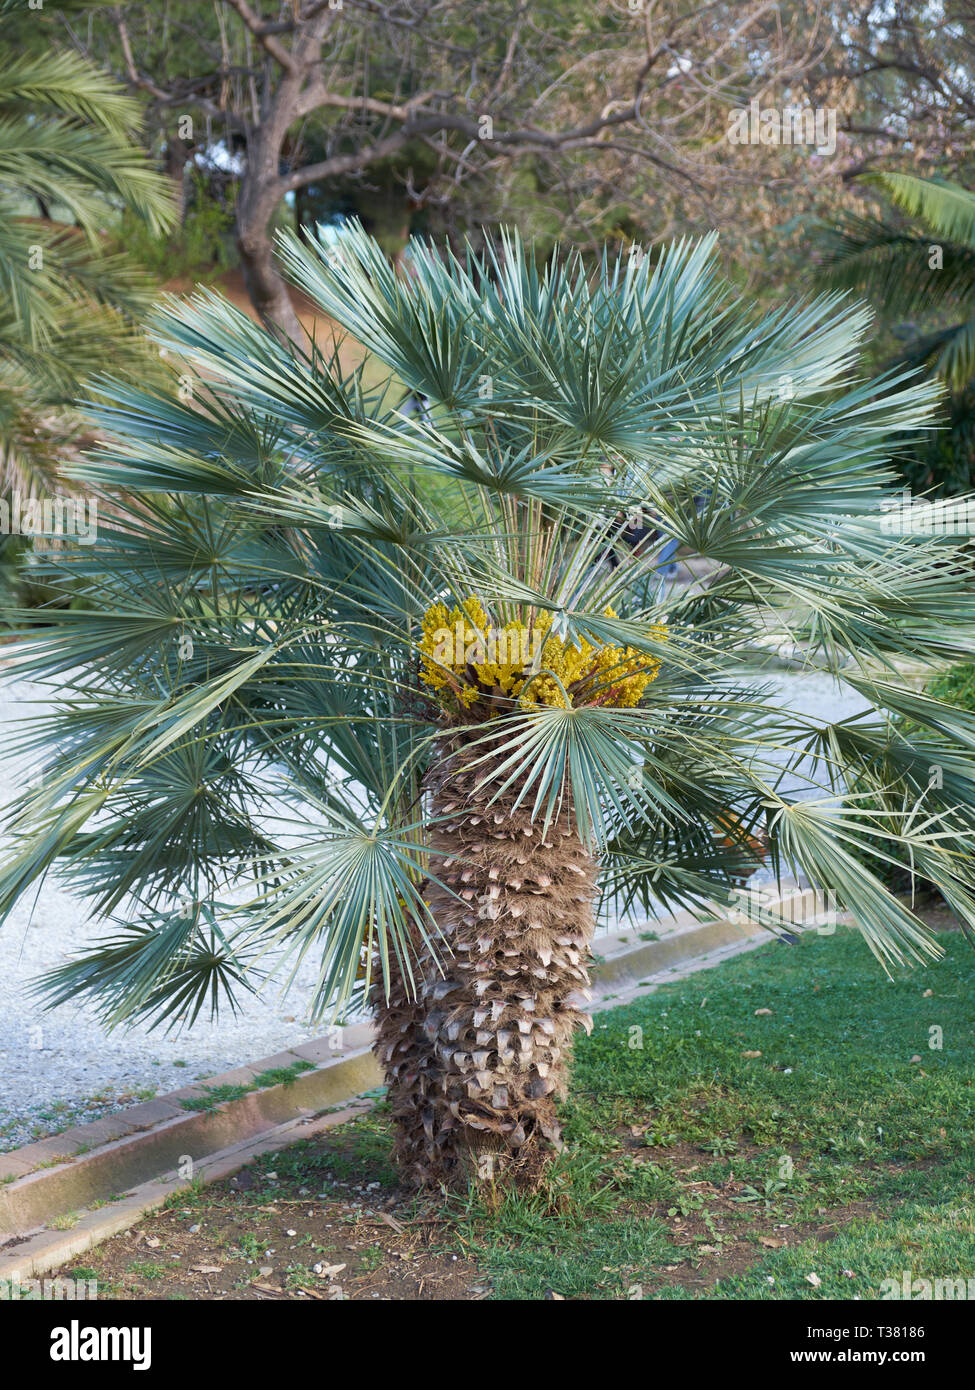 Chamaerops Humilis Cerifera - Blue mediterranean fan palm. Parque de La Paloma. Benalmádena, Málaga, Spain. Stock Photo